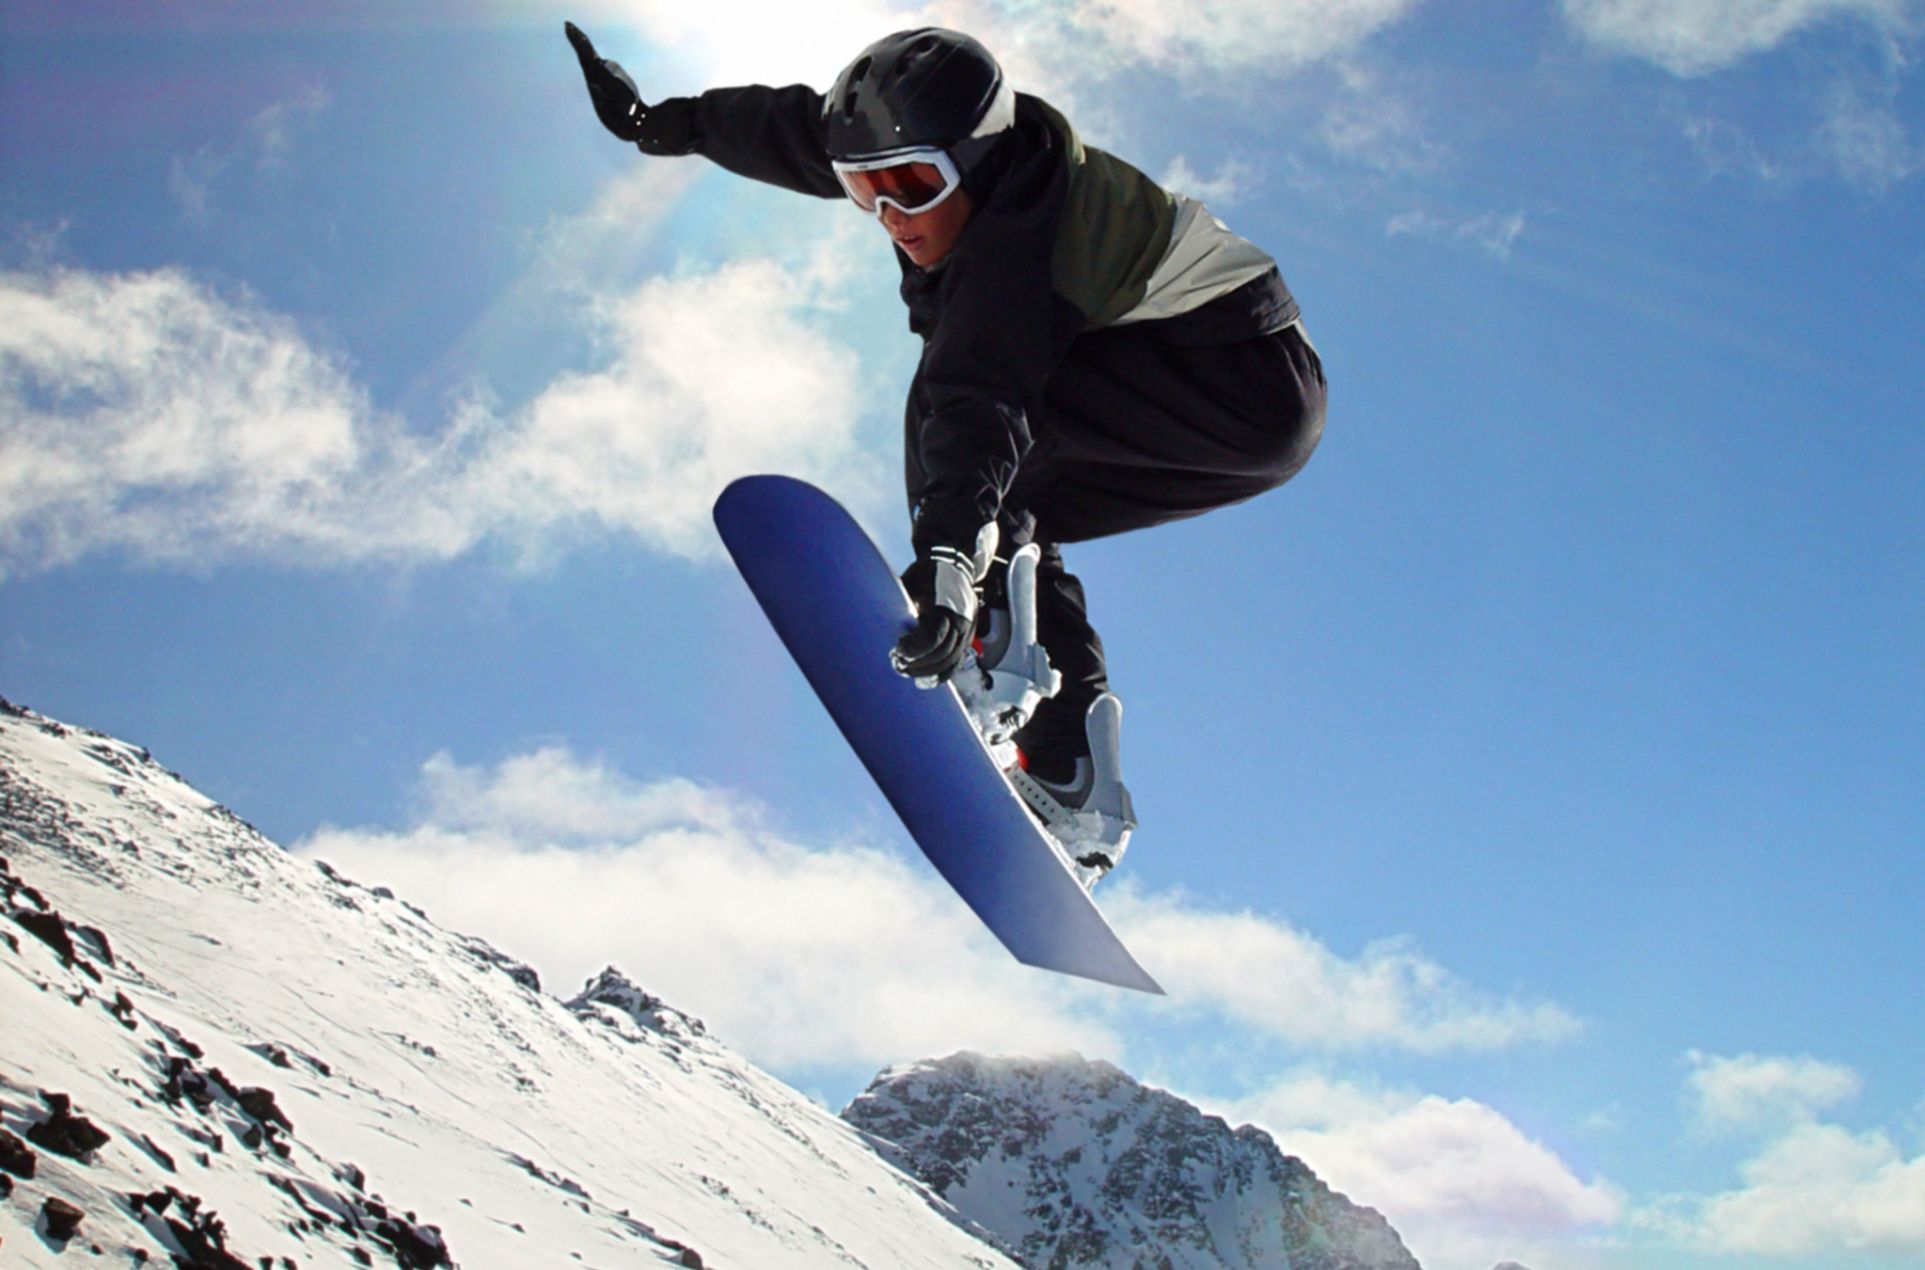 snowboarder thinkstockphotos 78021478 a95a9